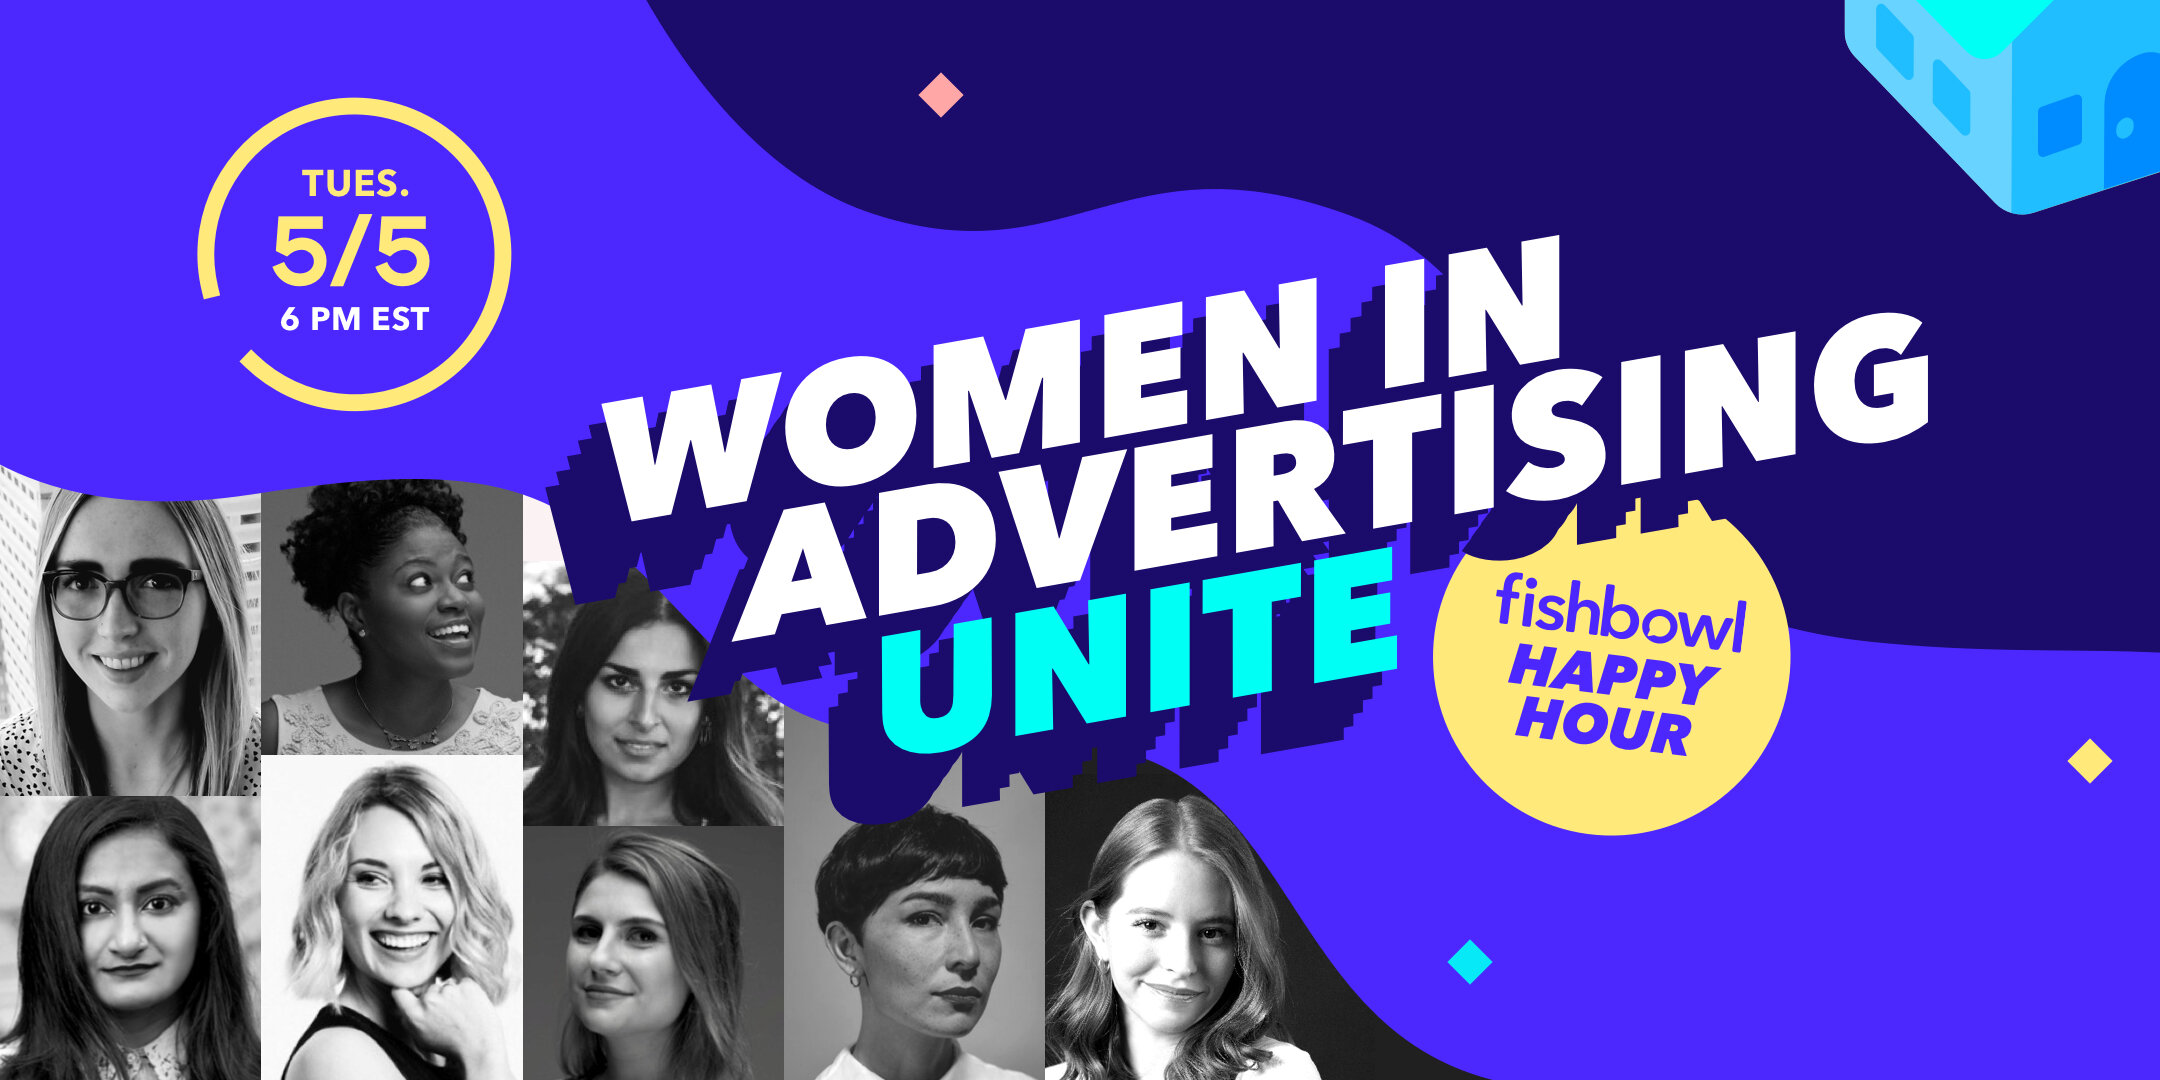 Linkedin Twitter - Happy Hour - Women in Advertising (2).jpg